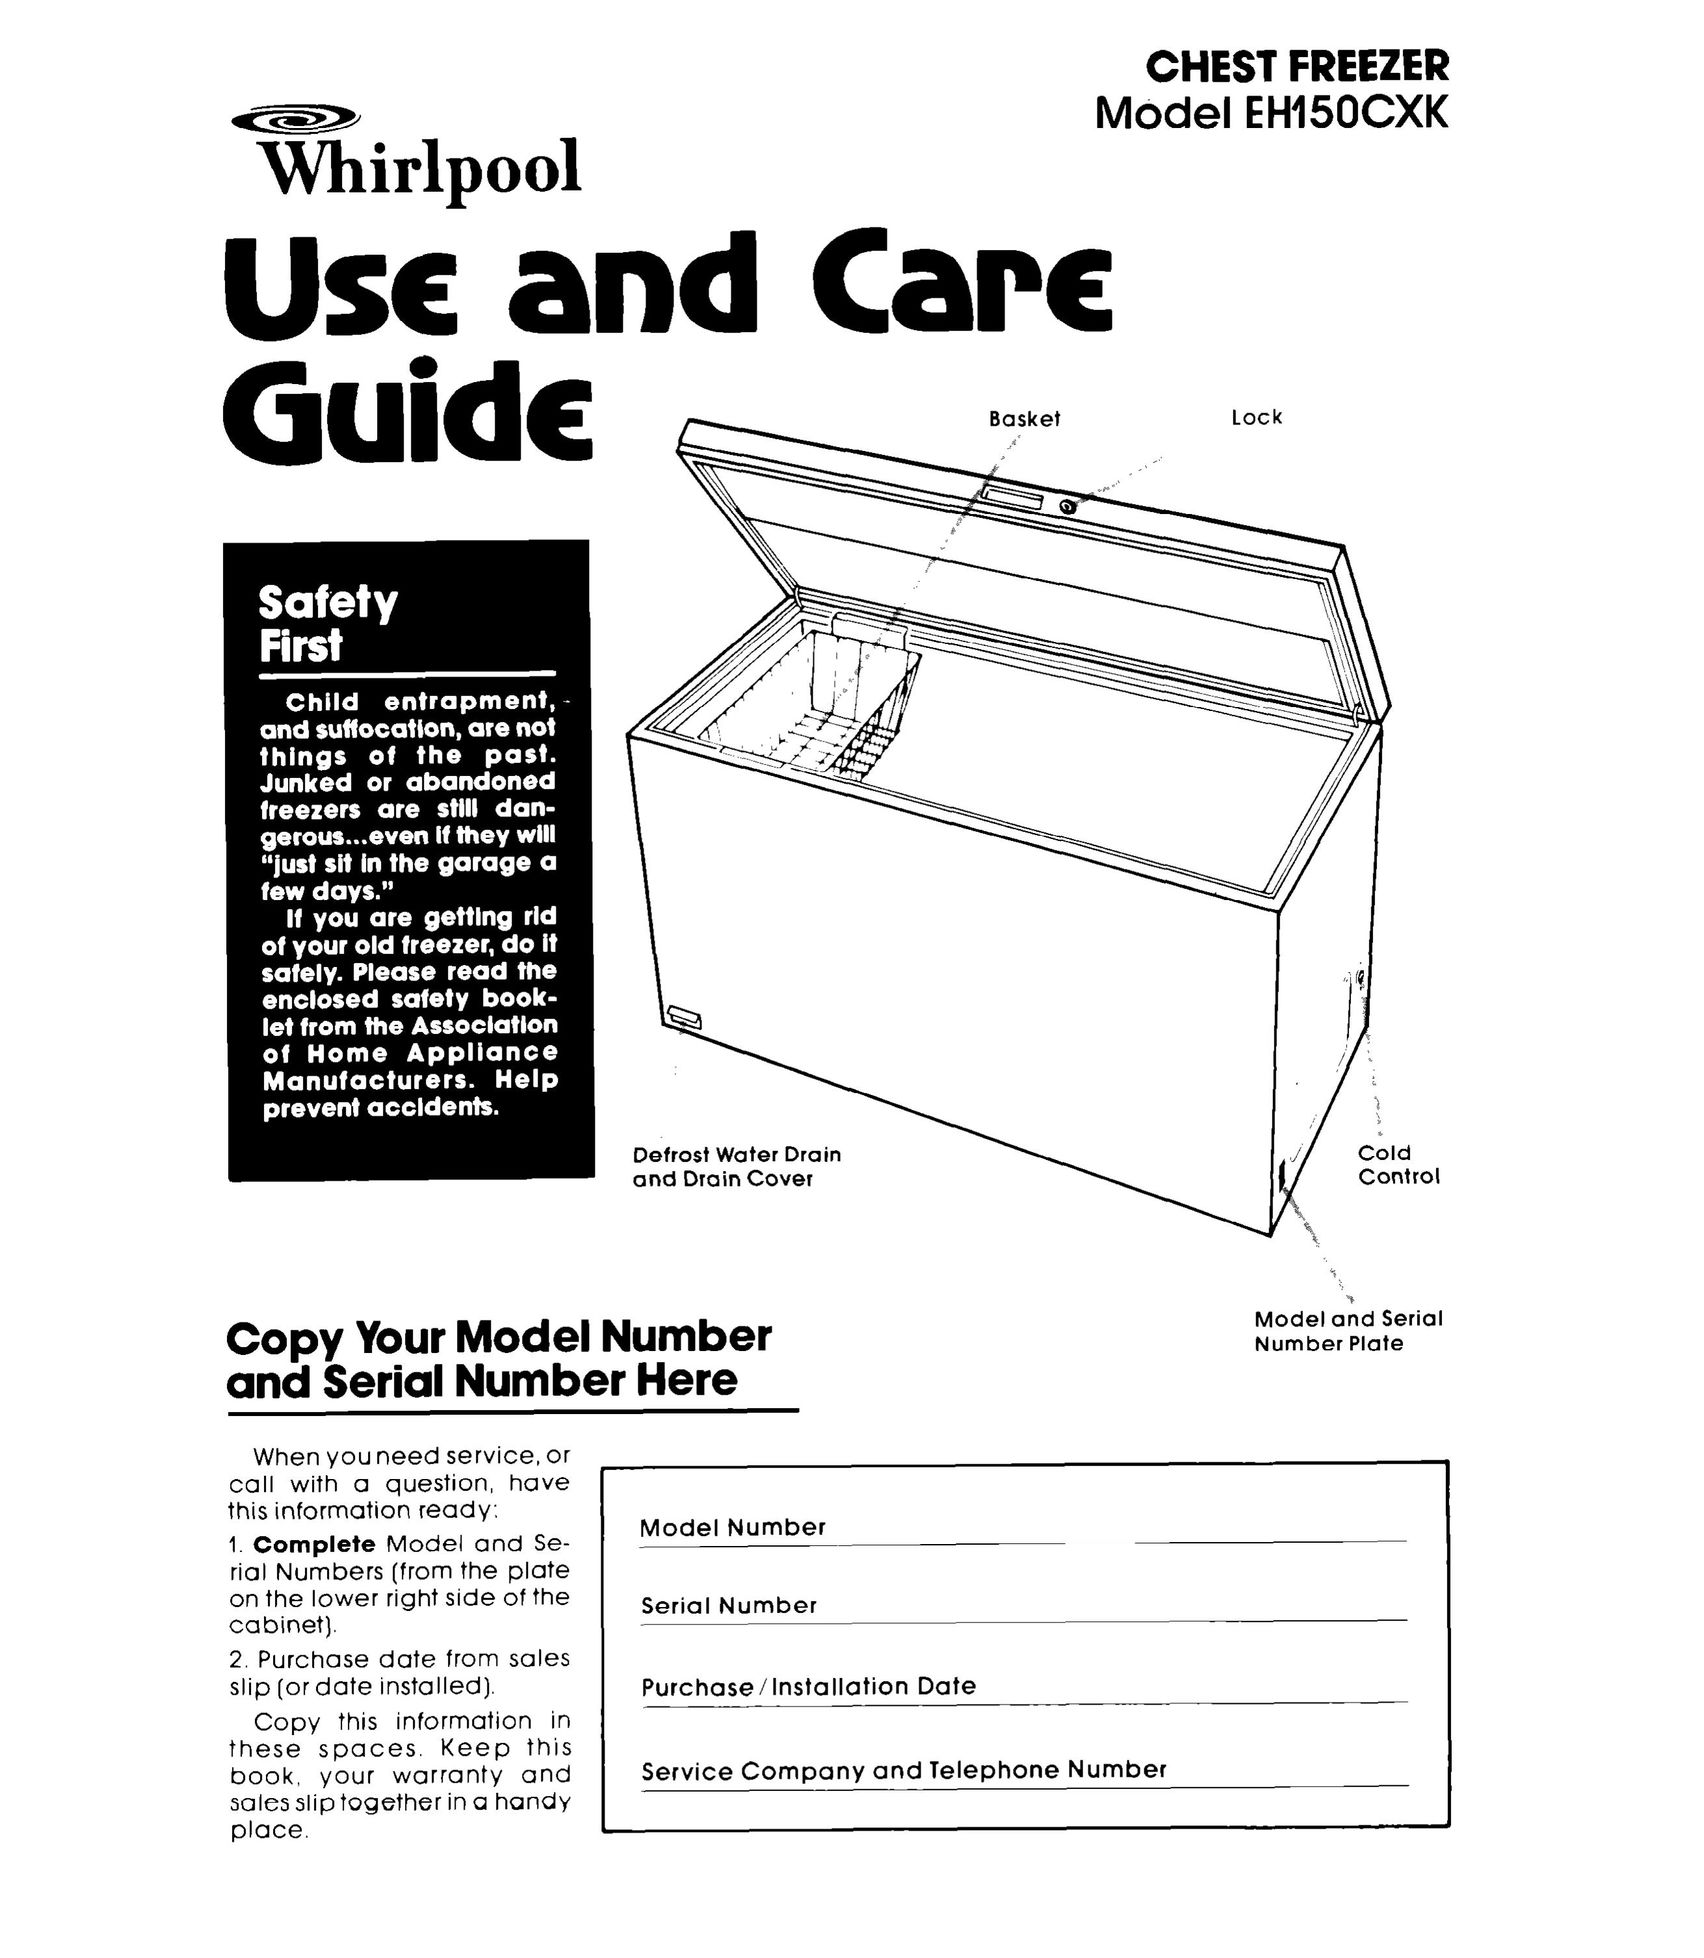 Whirlpool EH15OCXK Freezer User Manual